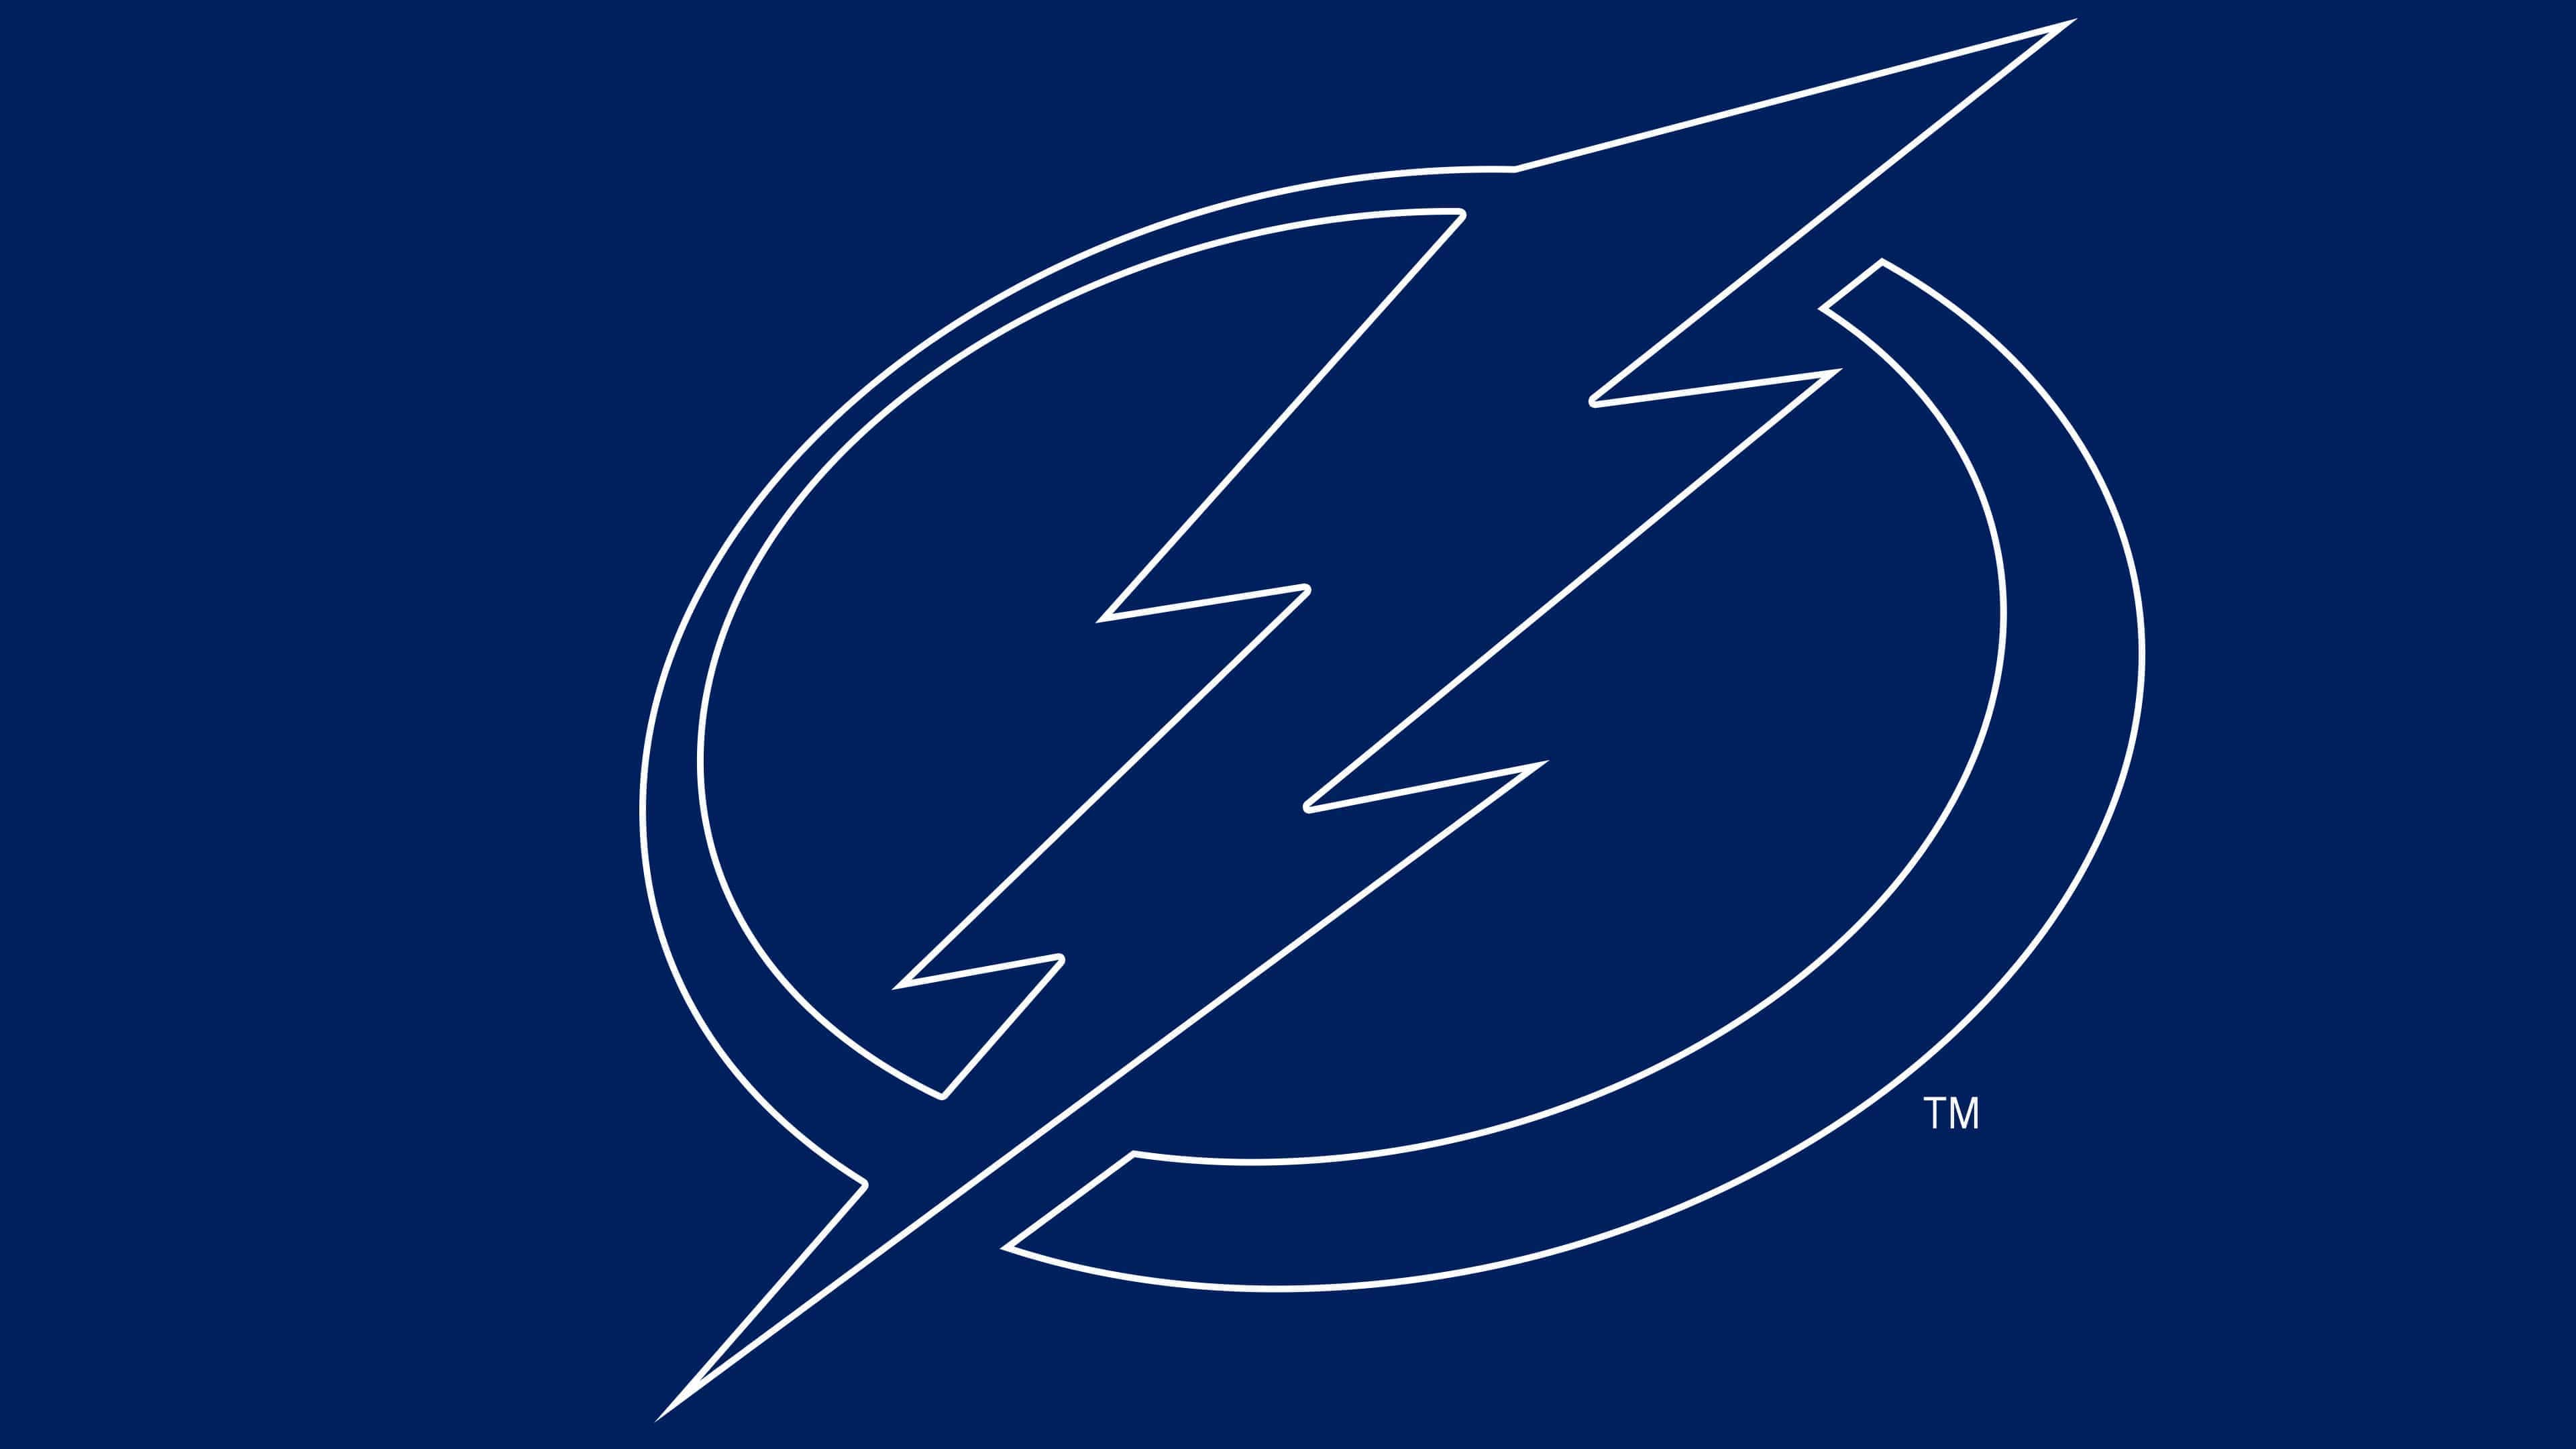 Tampa Bay Lightning Logo , symbol, meaning, history, PNG, brand